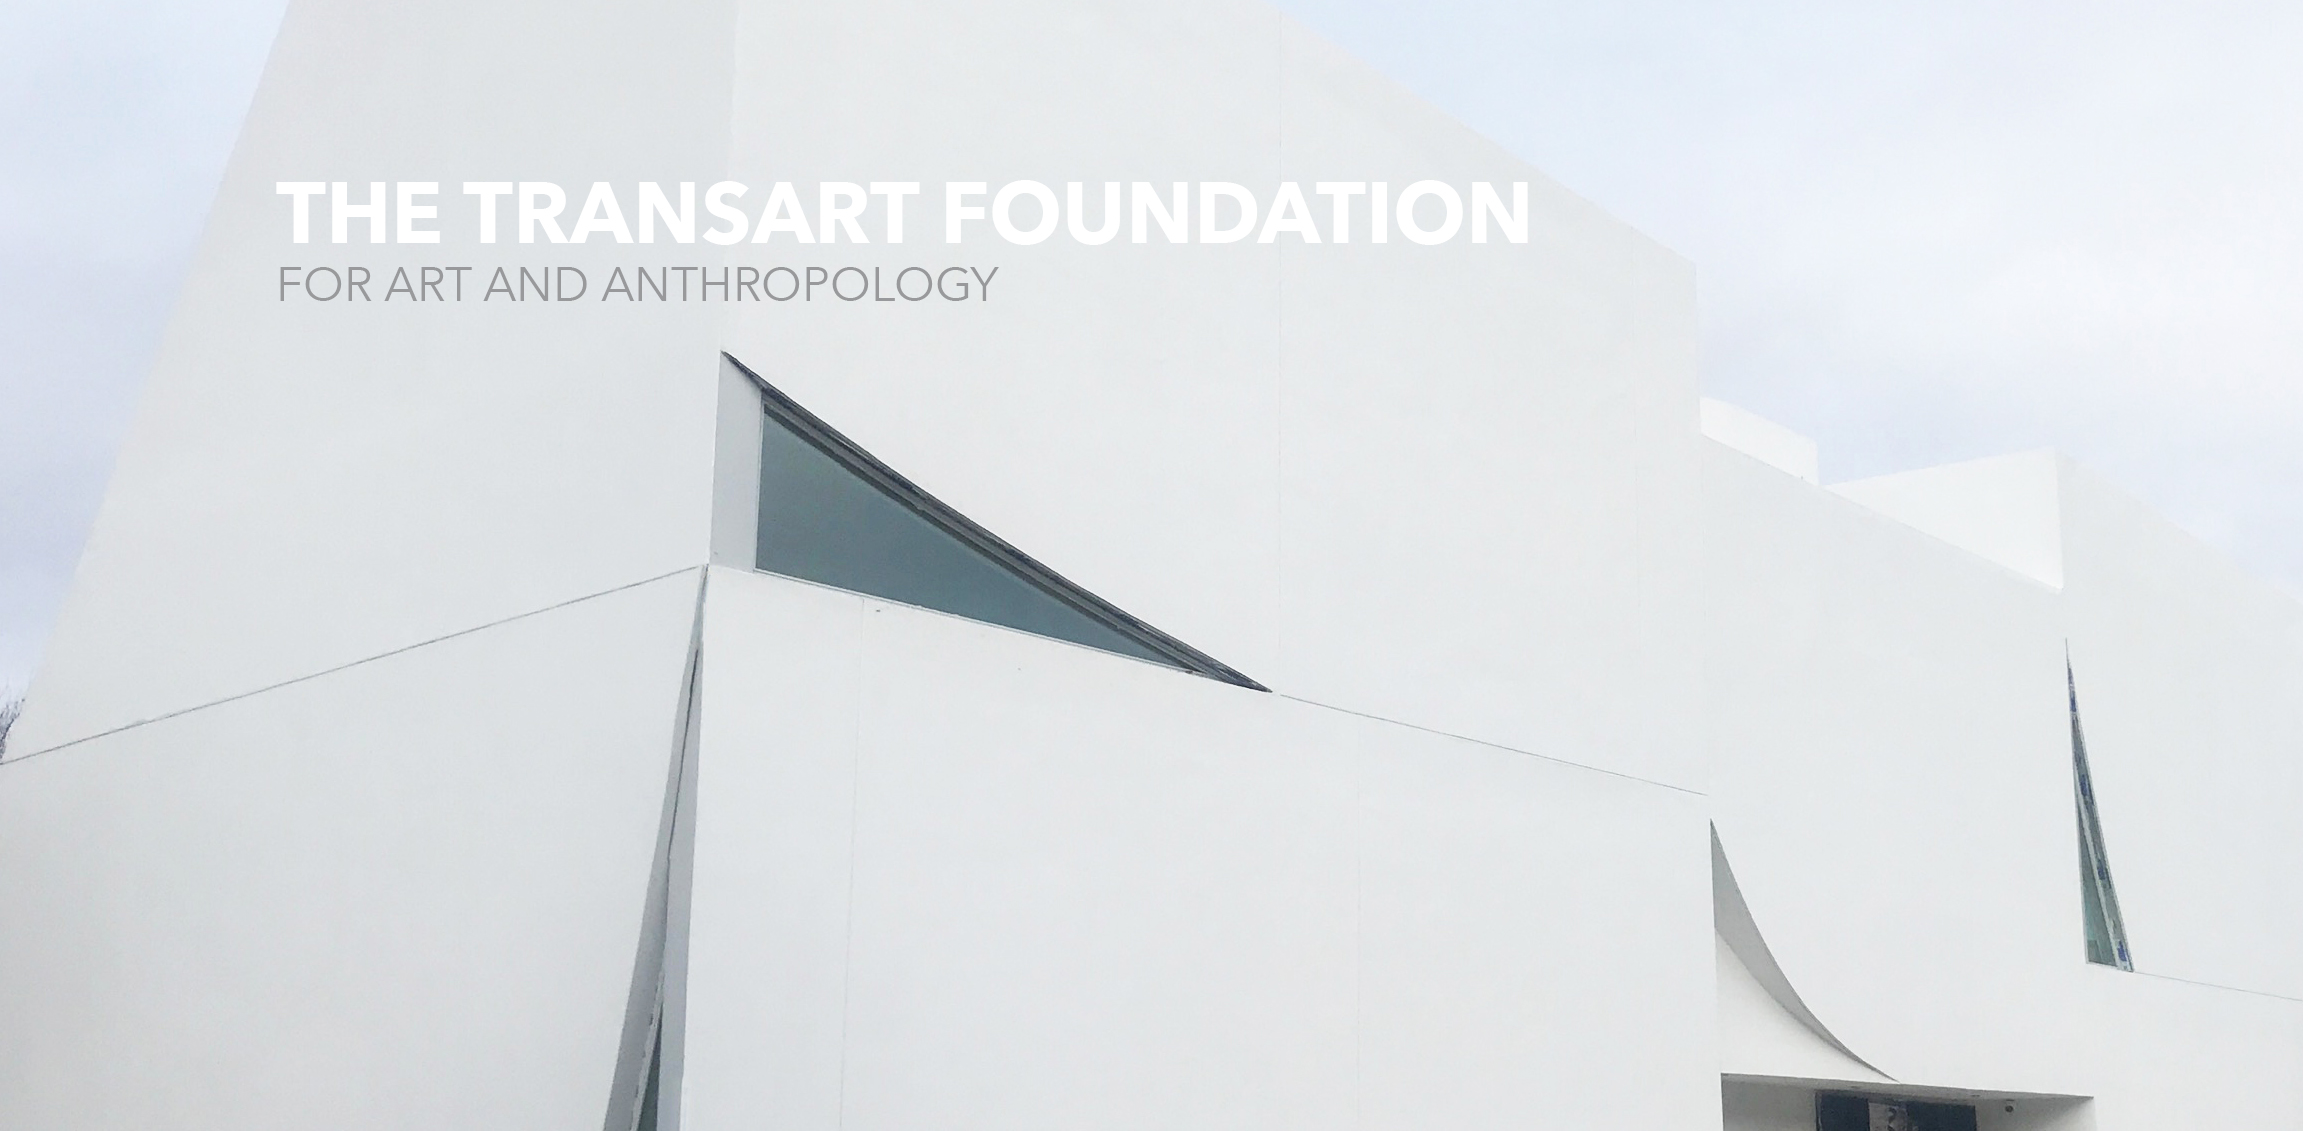 The Transart Foundation